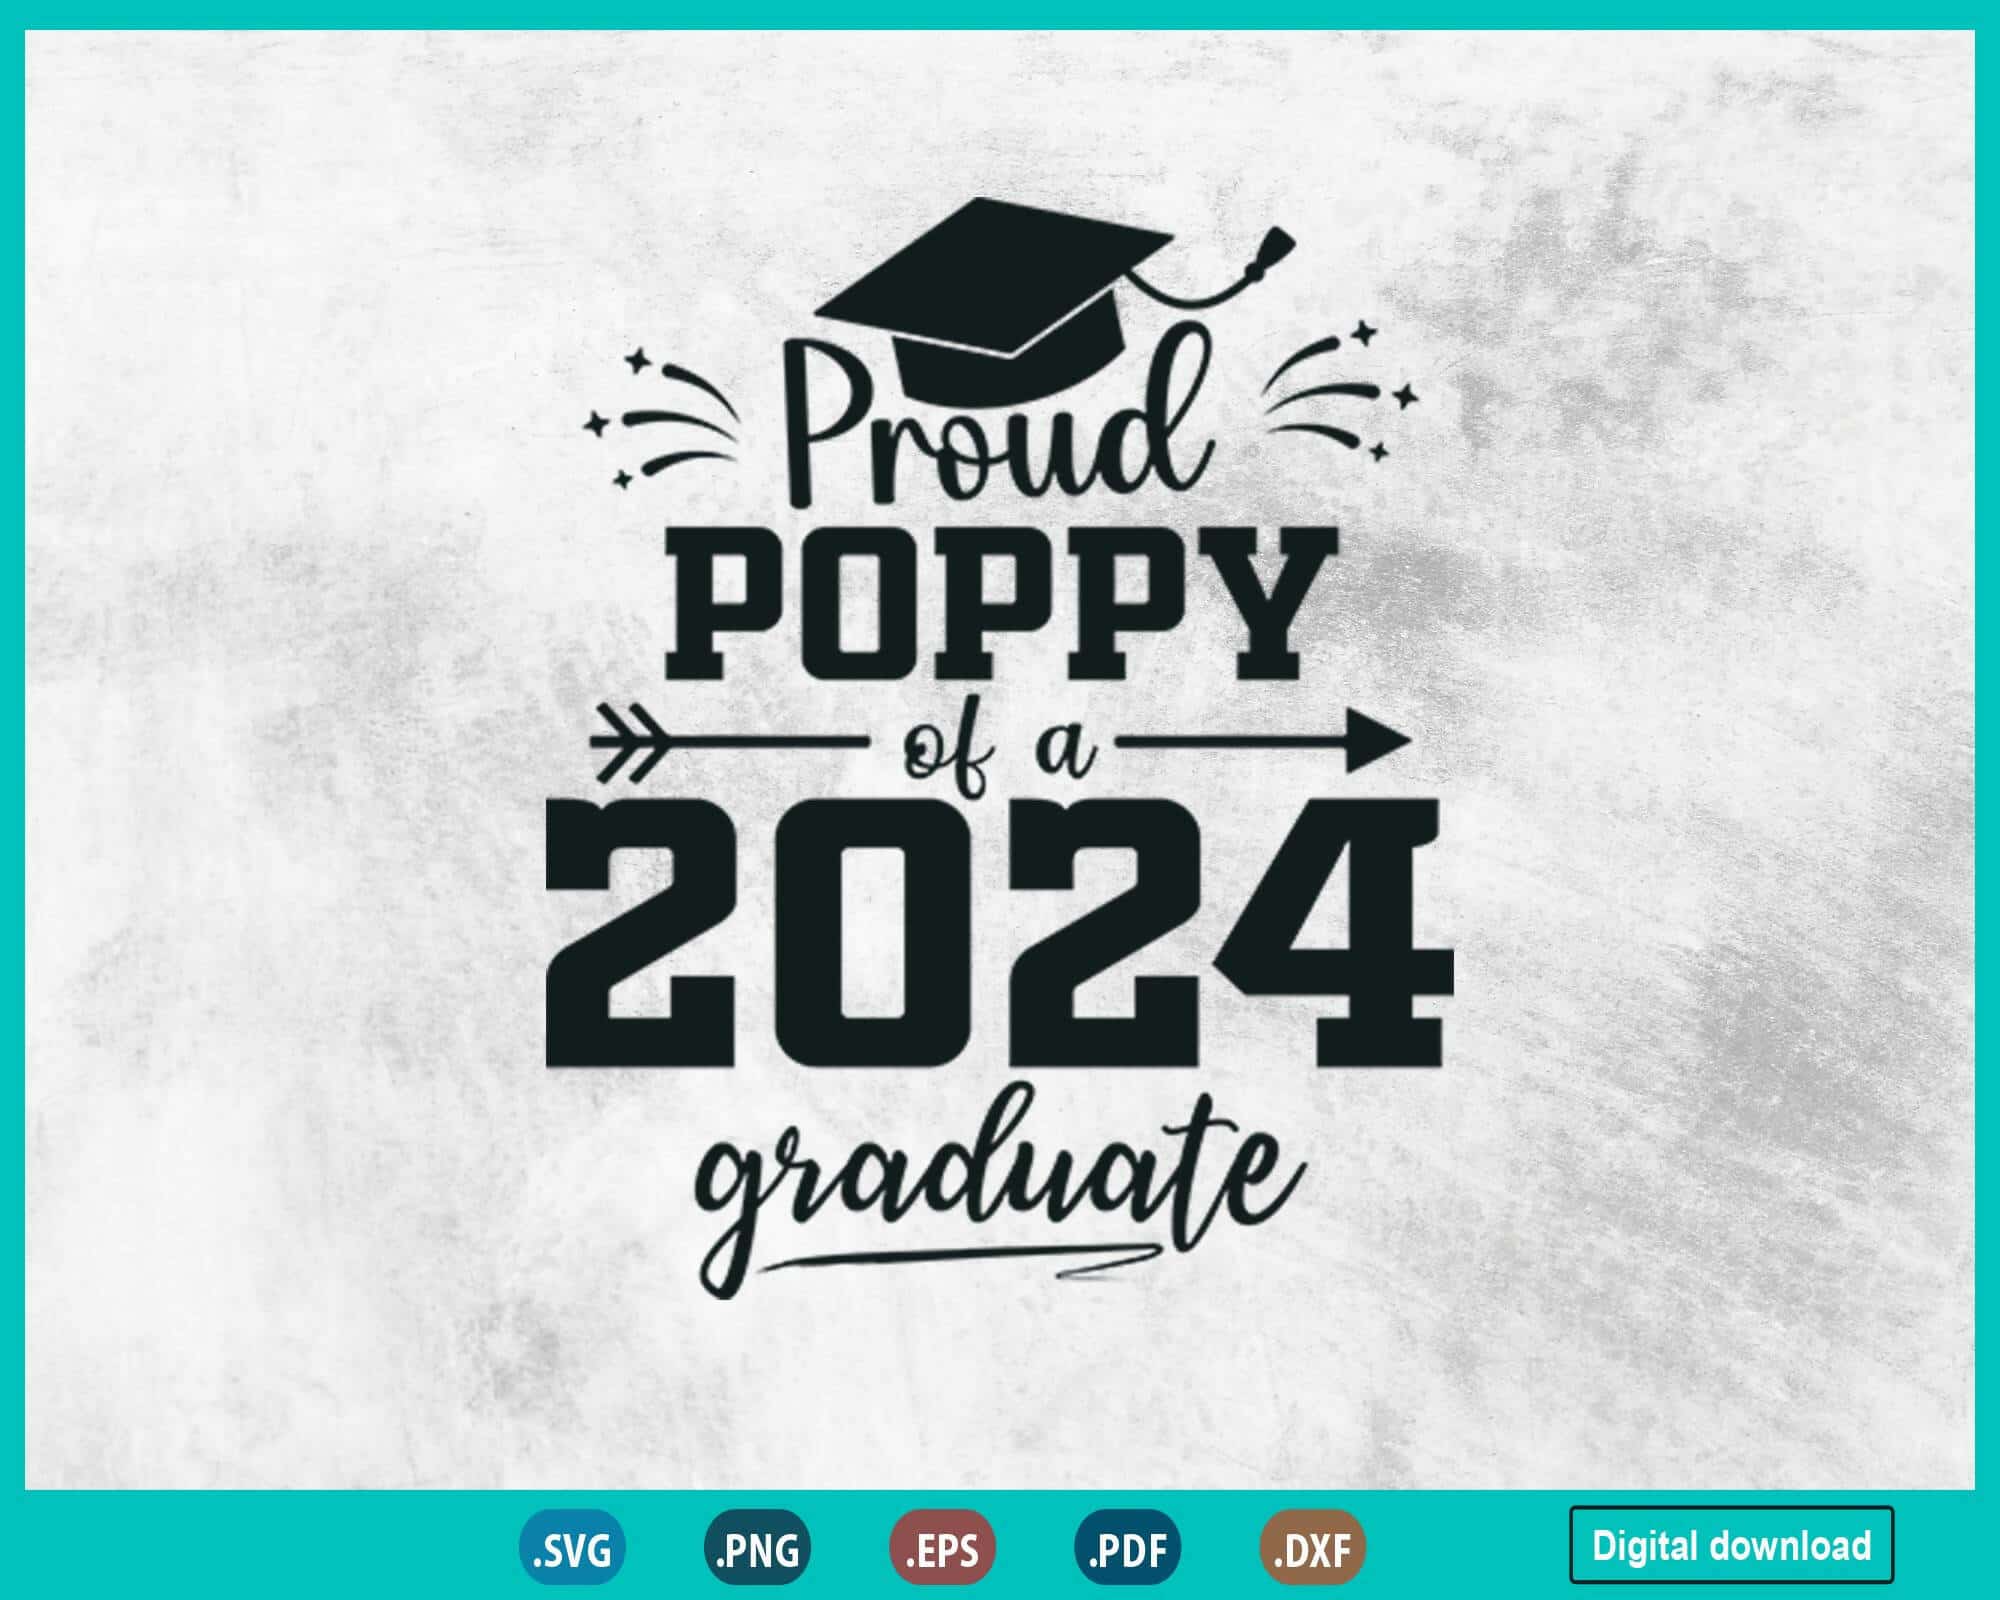 Proud Poppy Class of 2024 Senior Graduate Fathers day 24 Grad